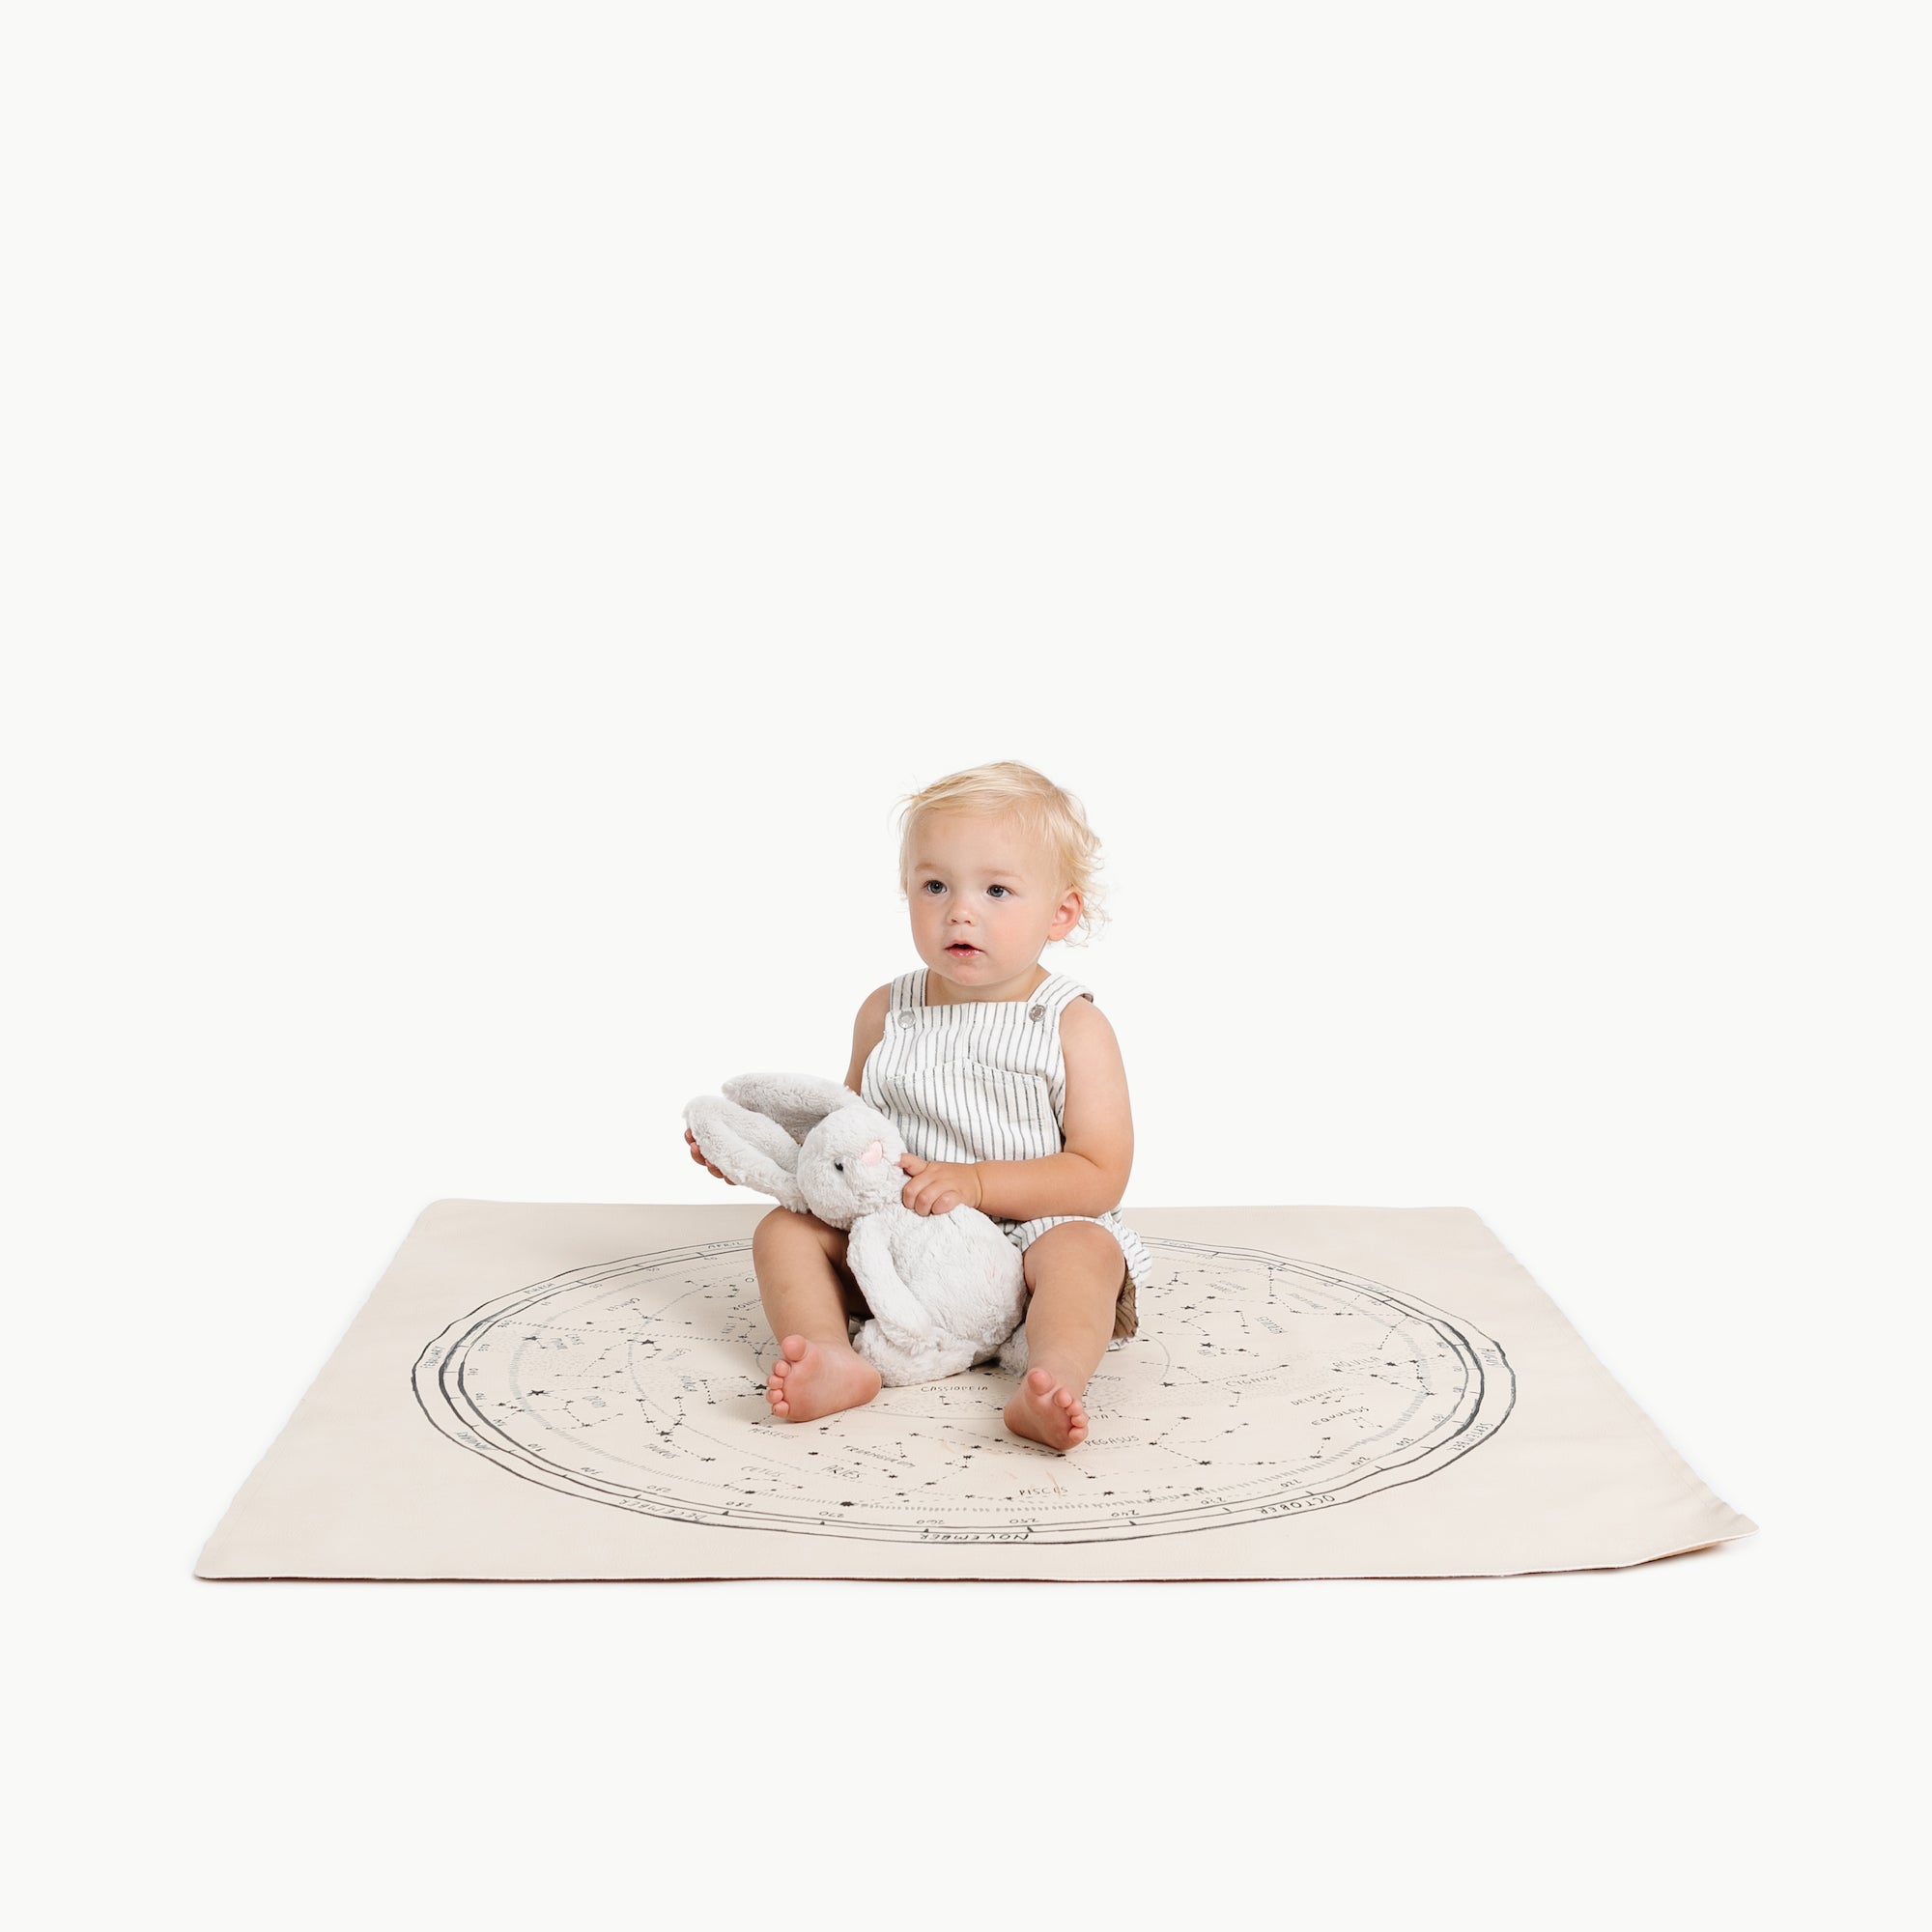 Constellation - Northern Hemisphere (on sale@kid sitting on the constellation mat